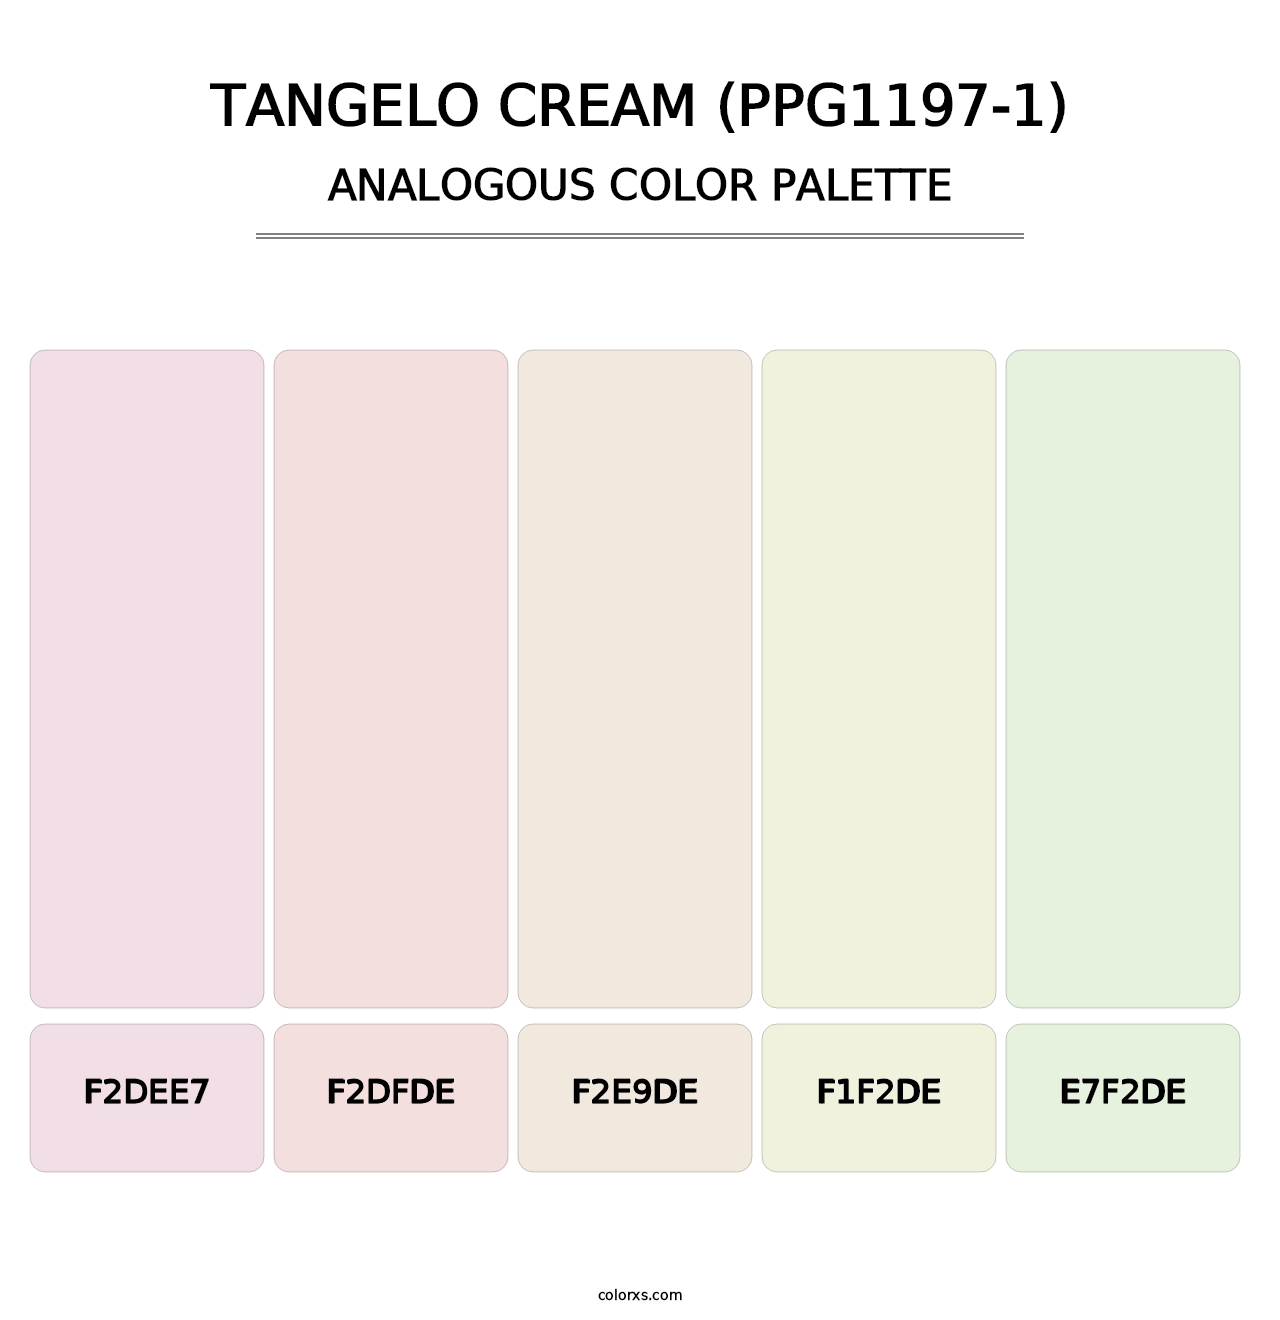 Tangelo Cream (PPG1197-1) - Analogous Color Palette